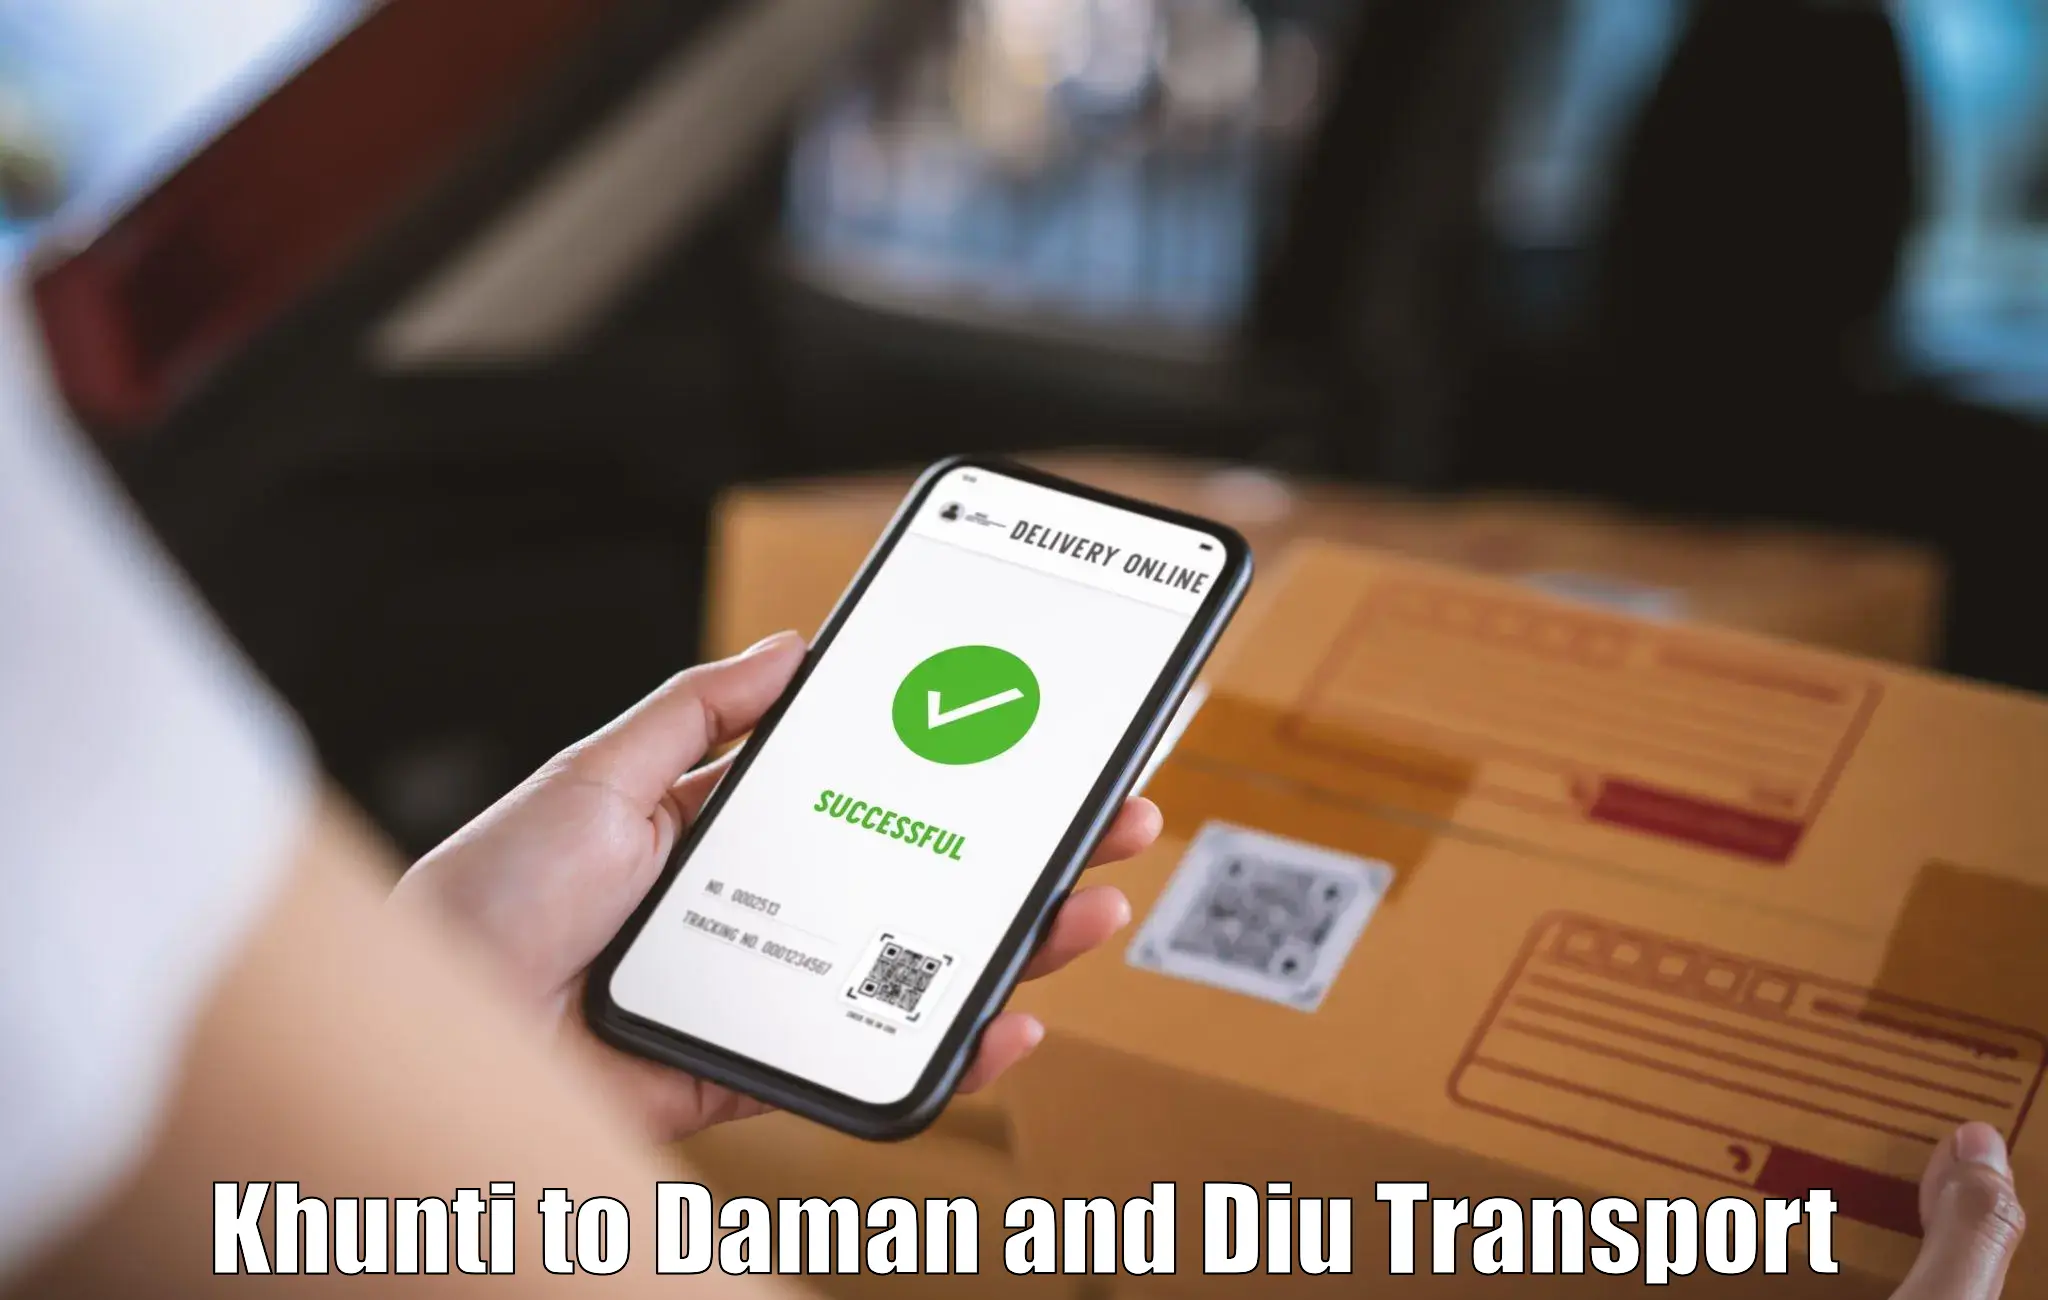 Transport in sharing Khunti to Daman and Diu